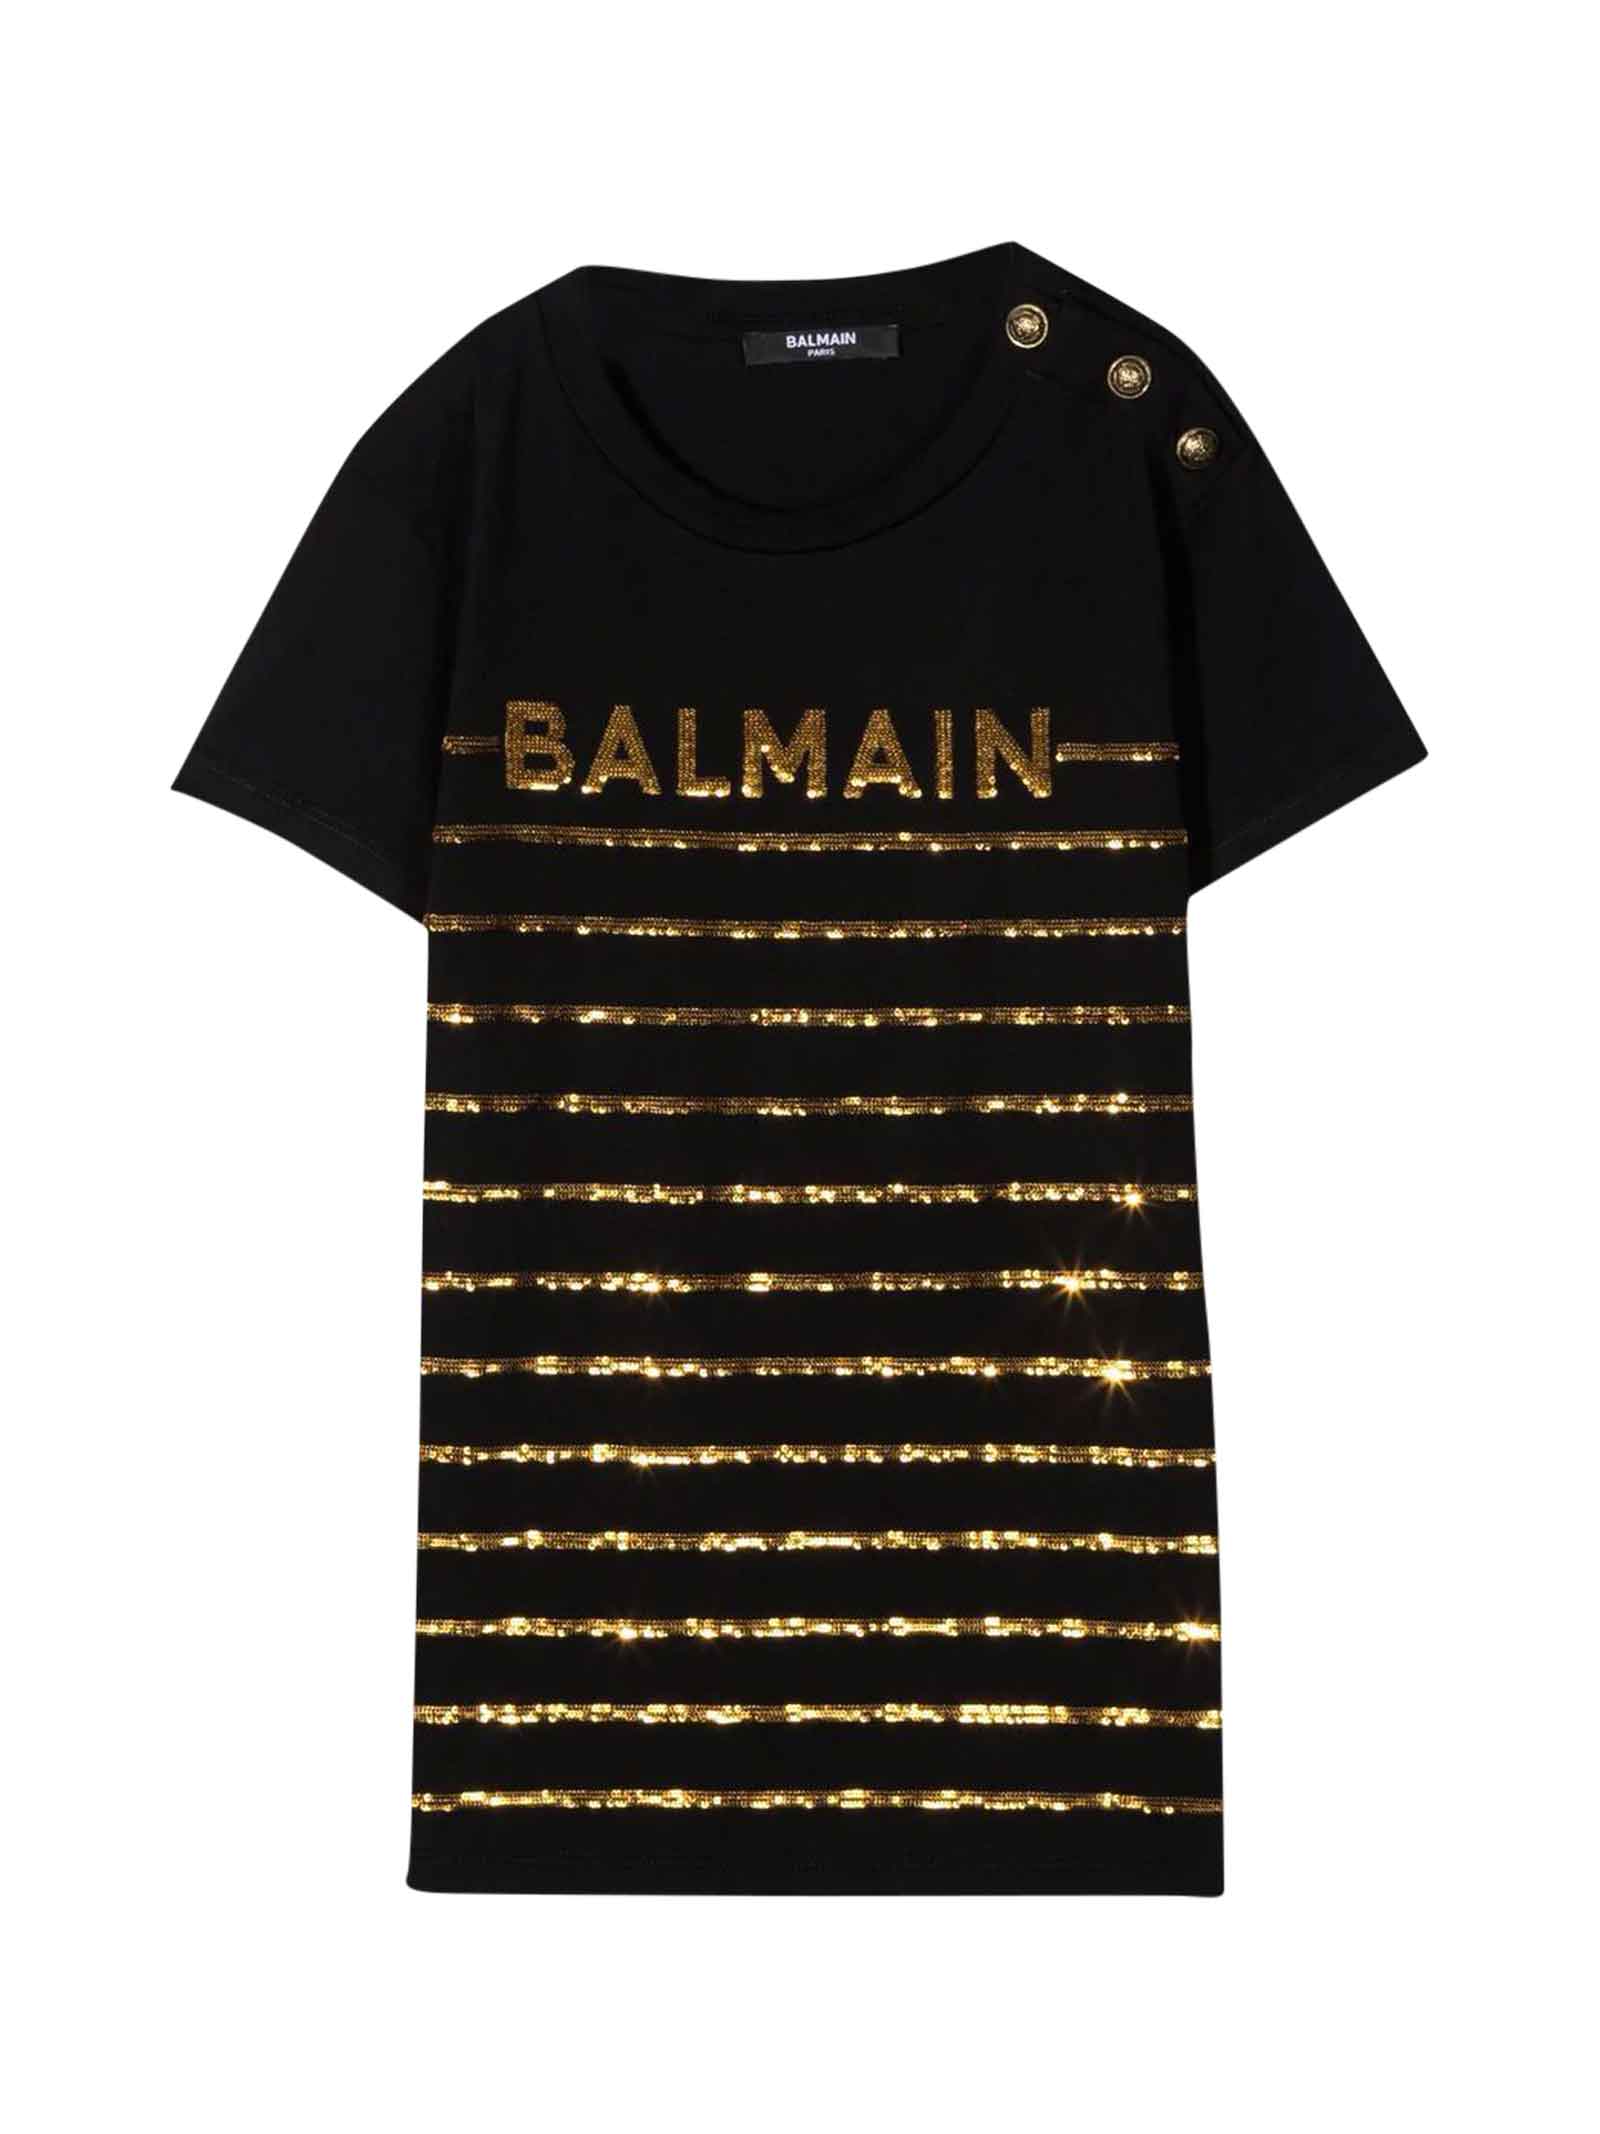 BALMAIN BLACK T-SHIRT,6O8061OB690 930